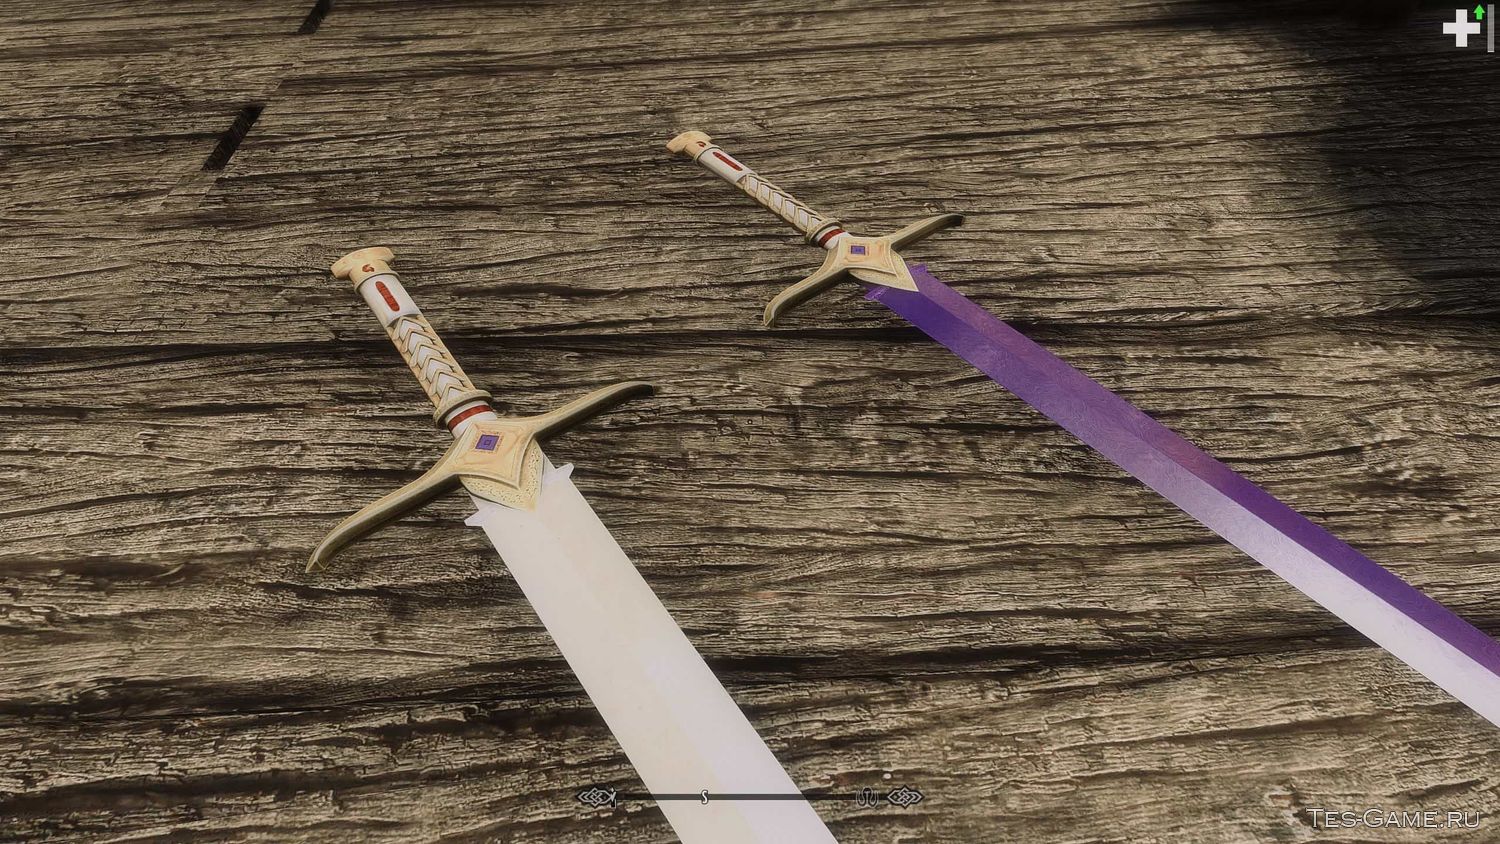 Simply swords мод